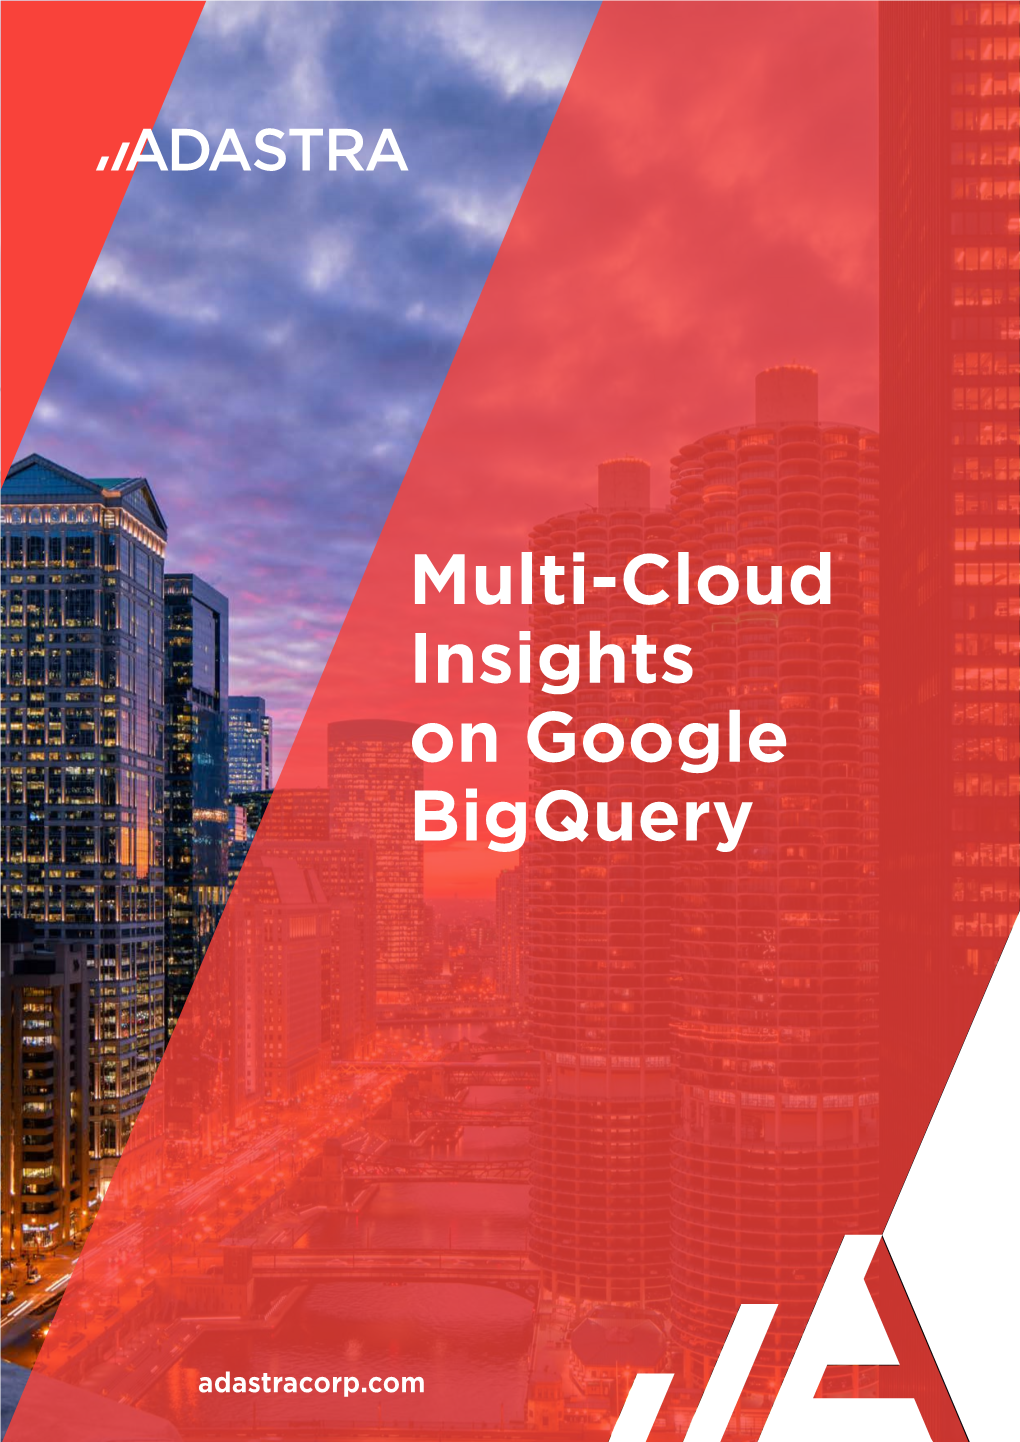 Multi-Cloud Insights on Google Bigquery